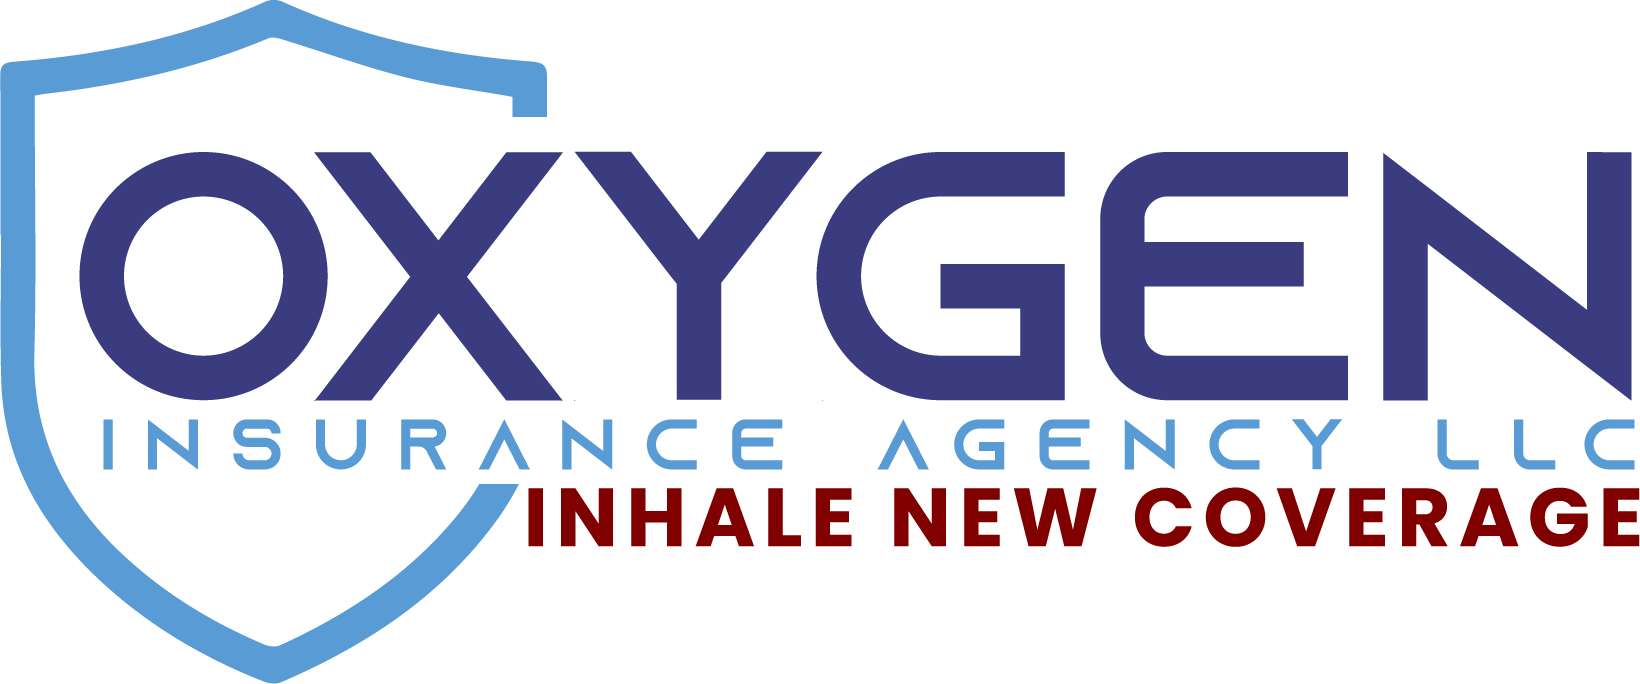 Oxygen Insurance Agency logo color